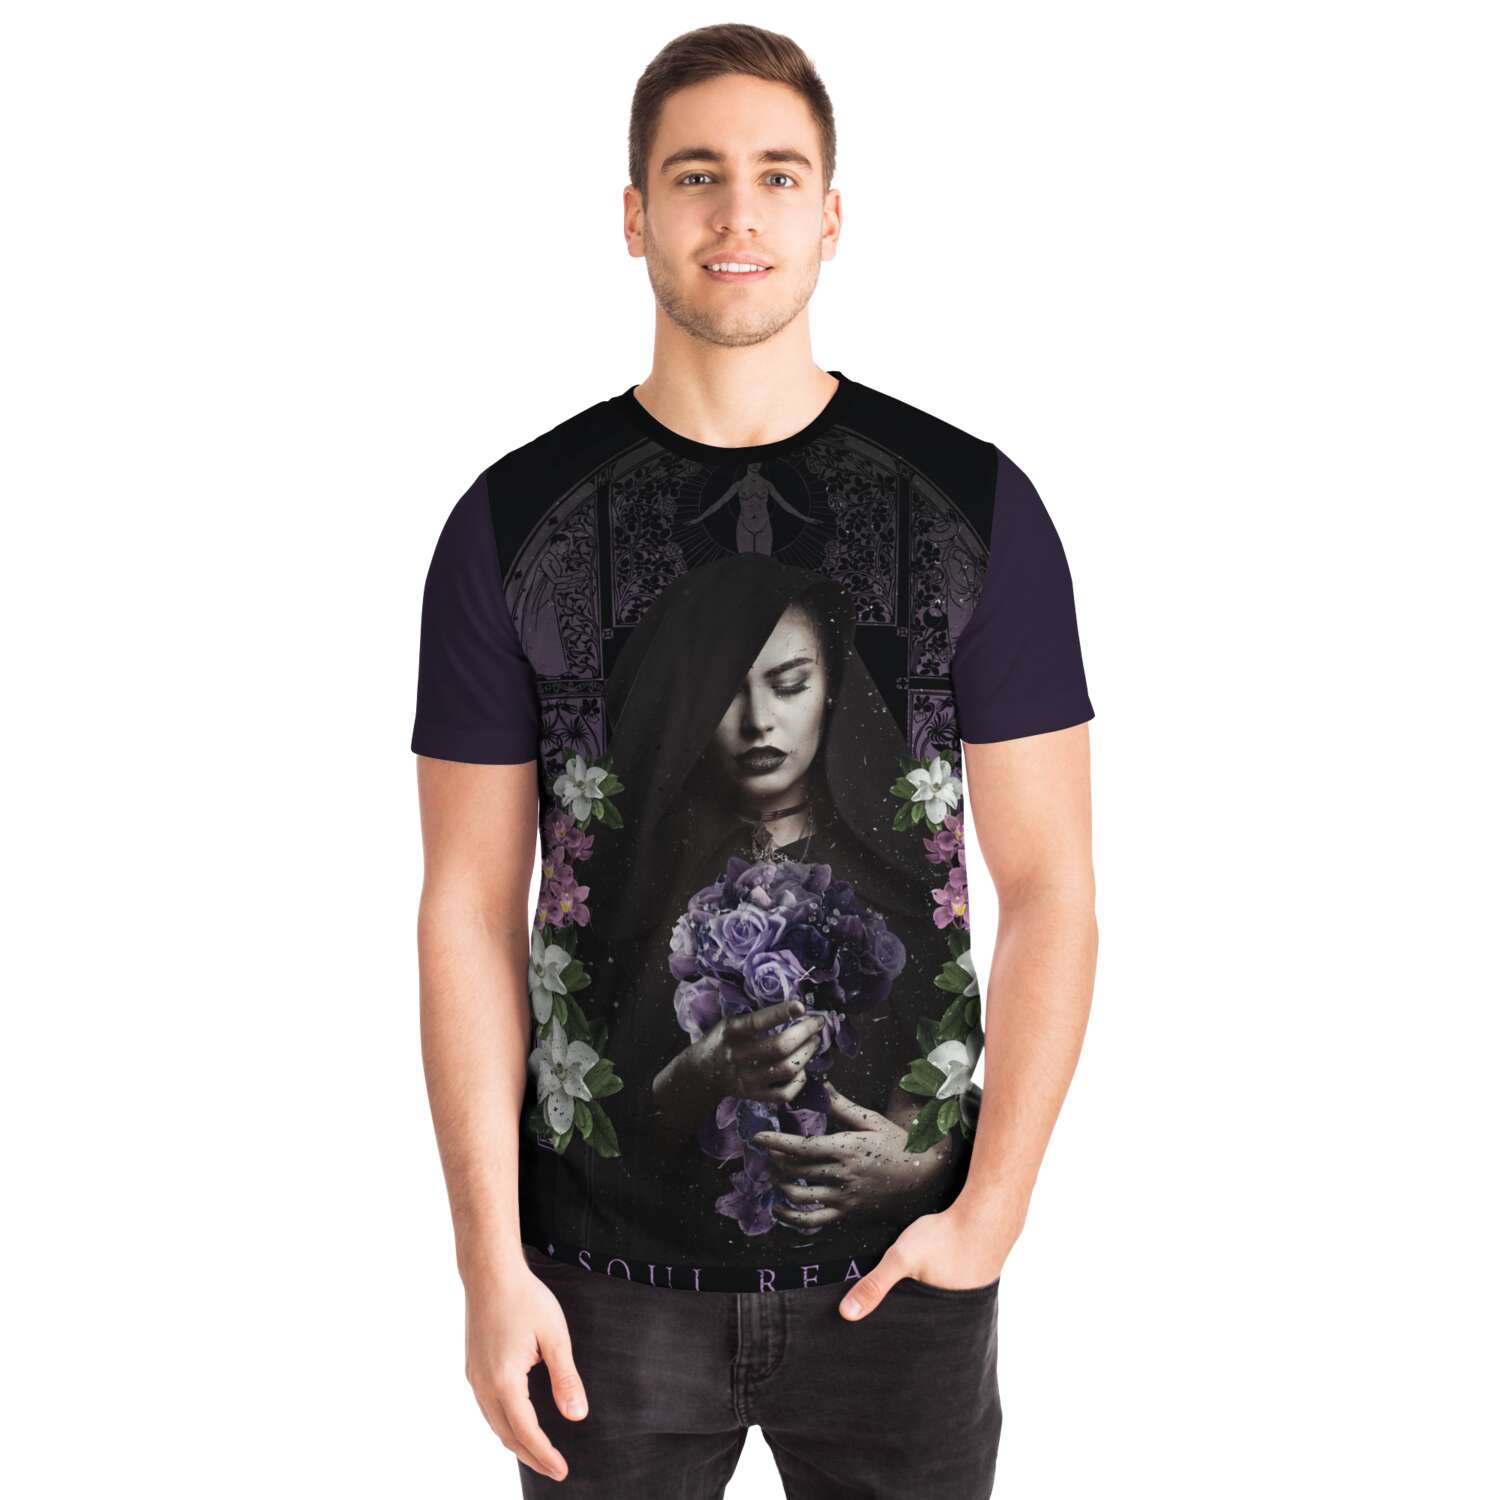 Dark Lady Soul Reaper T-Shirt